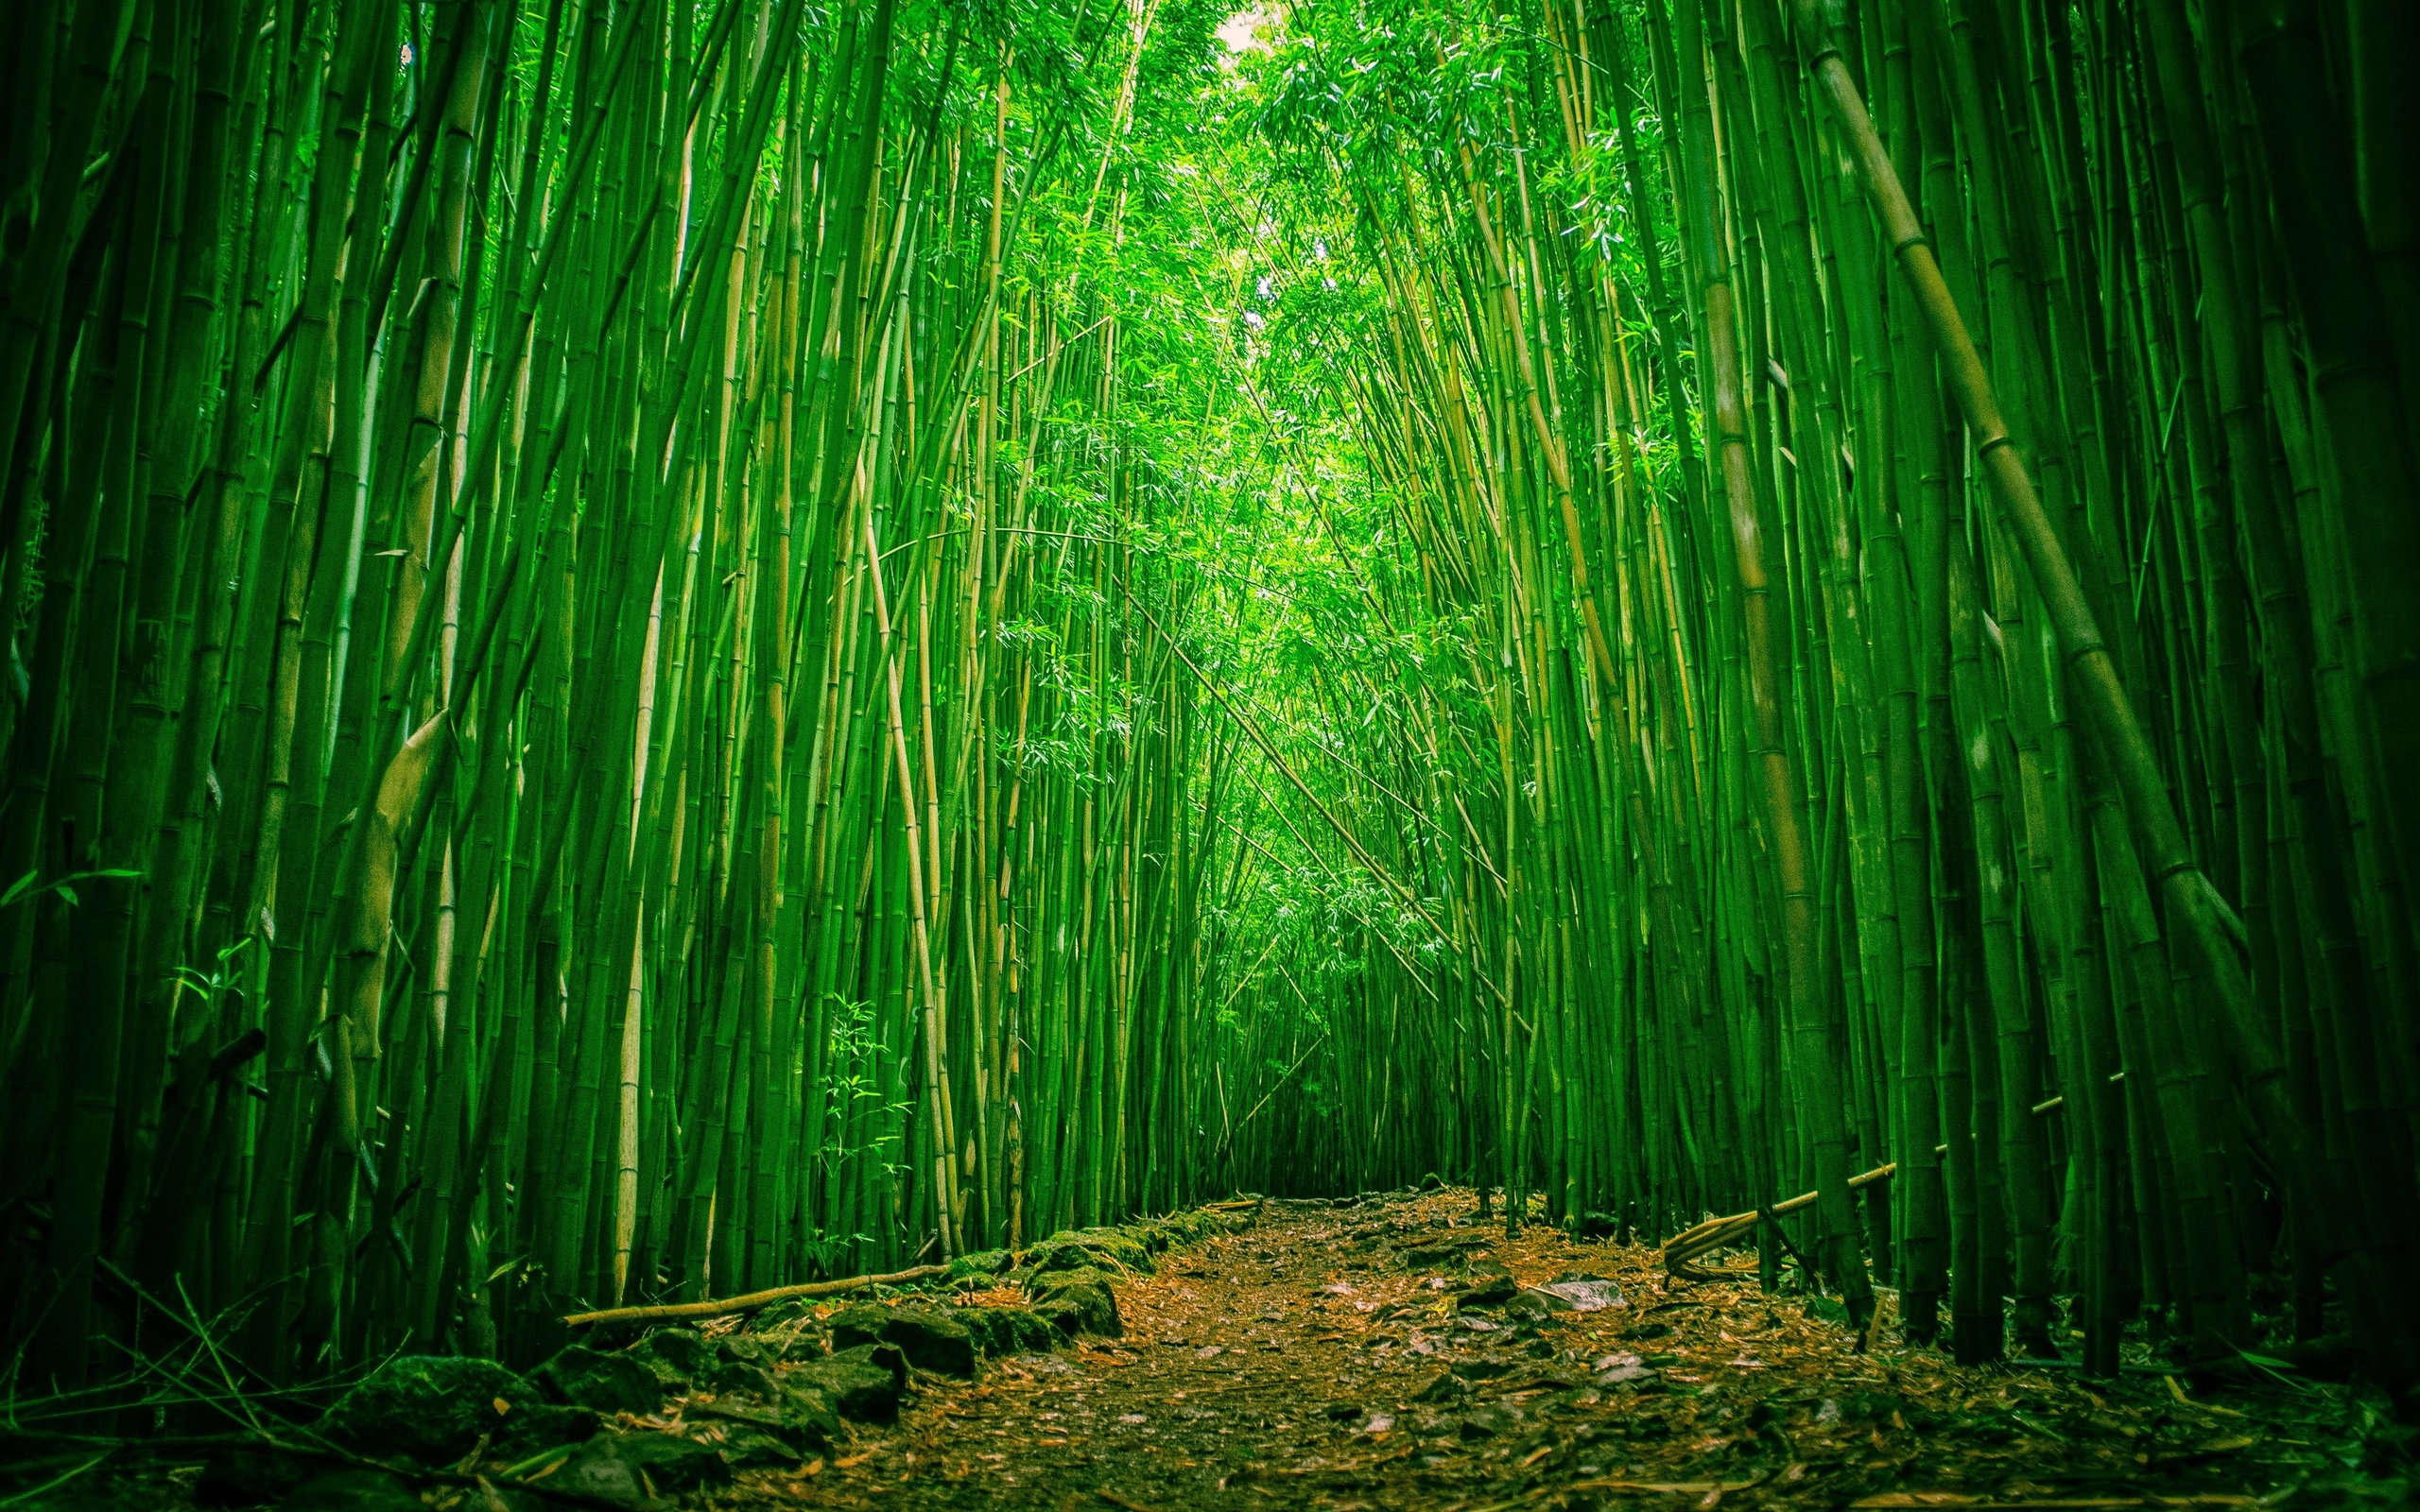 HD Wallpaper Bamboo Forest X Kb Jpeg